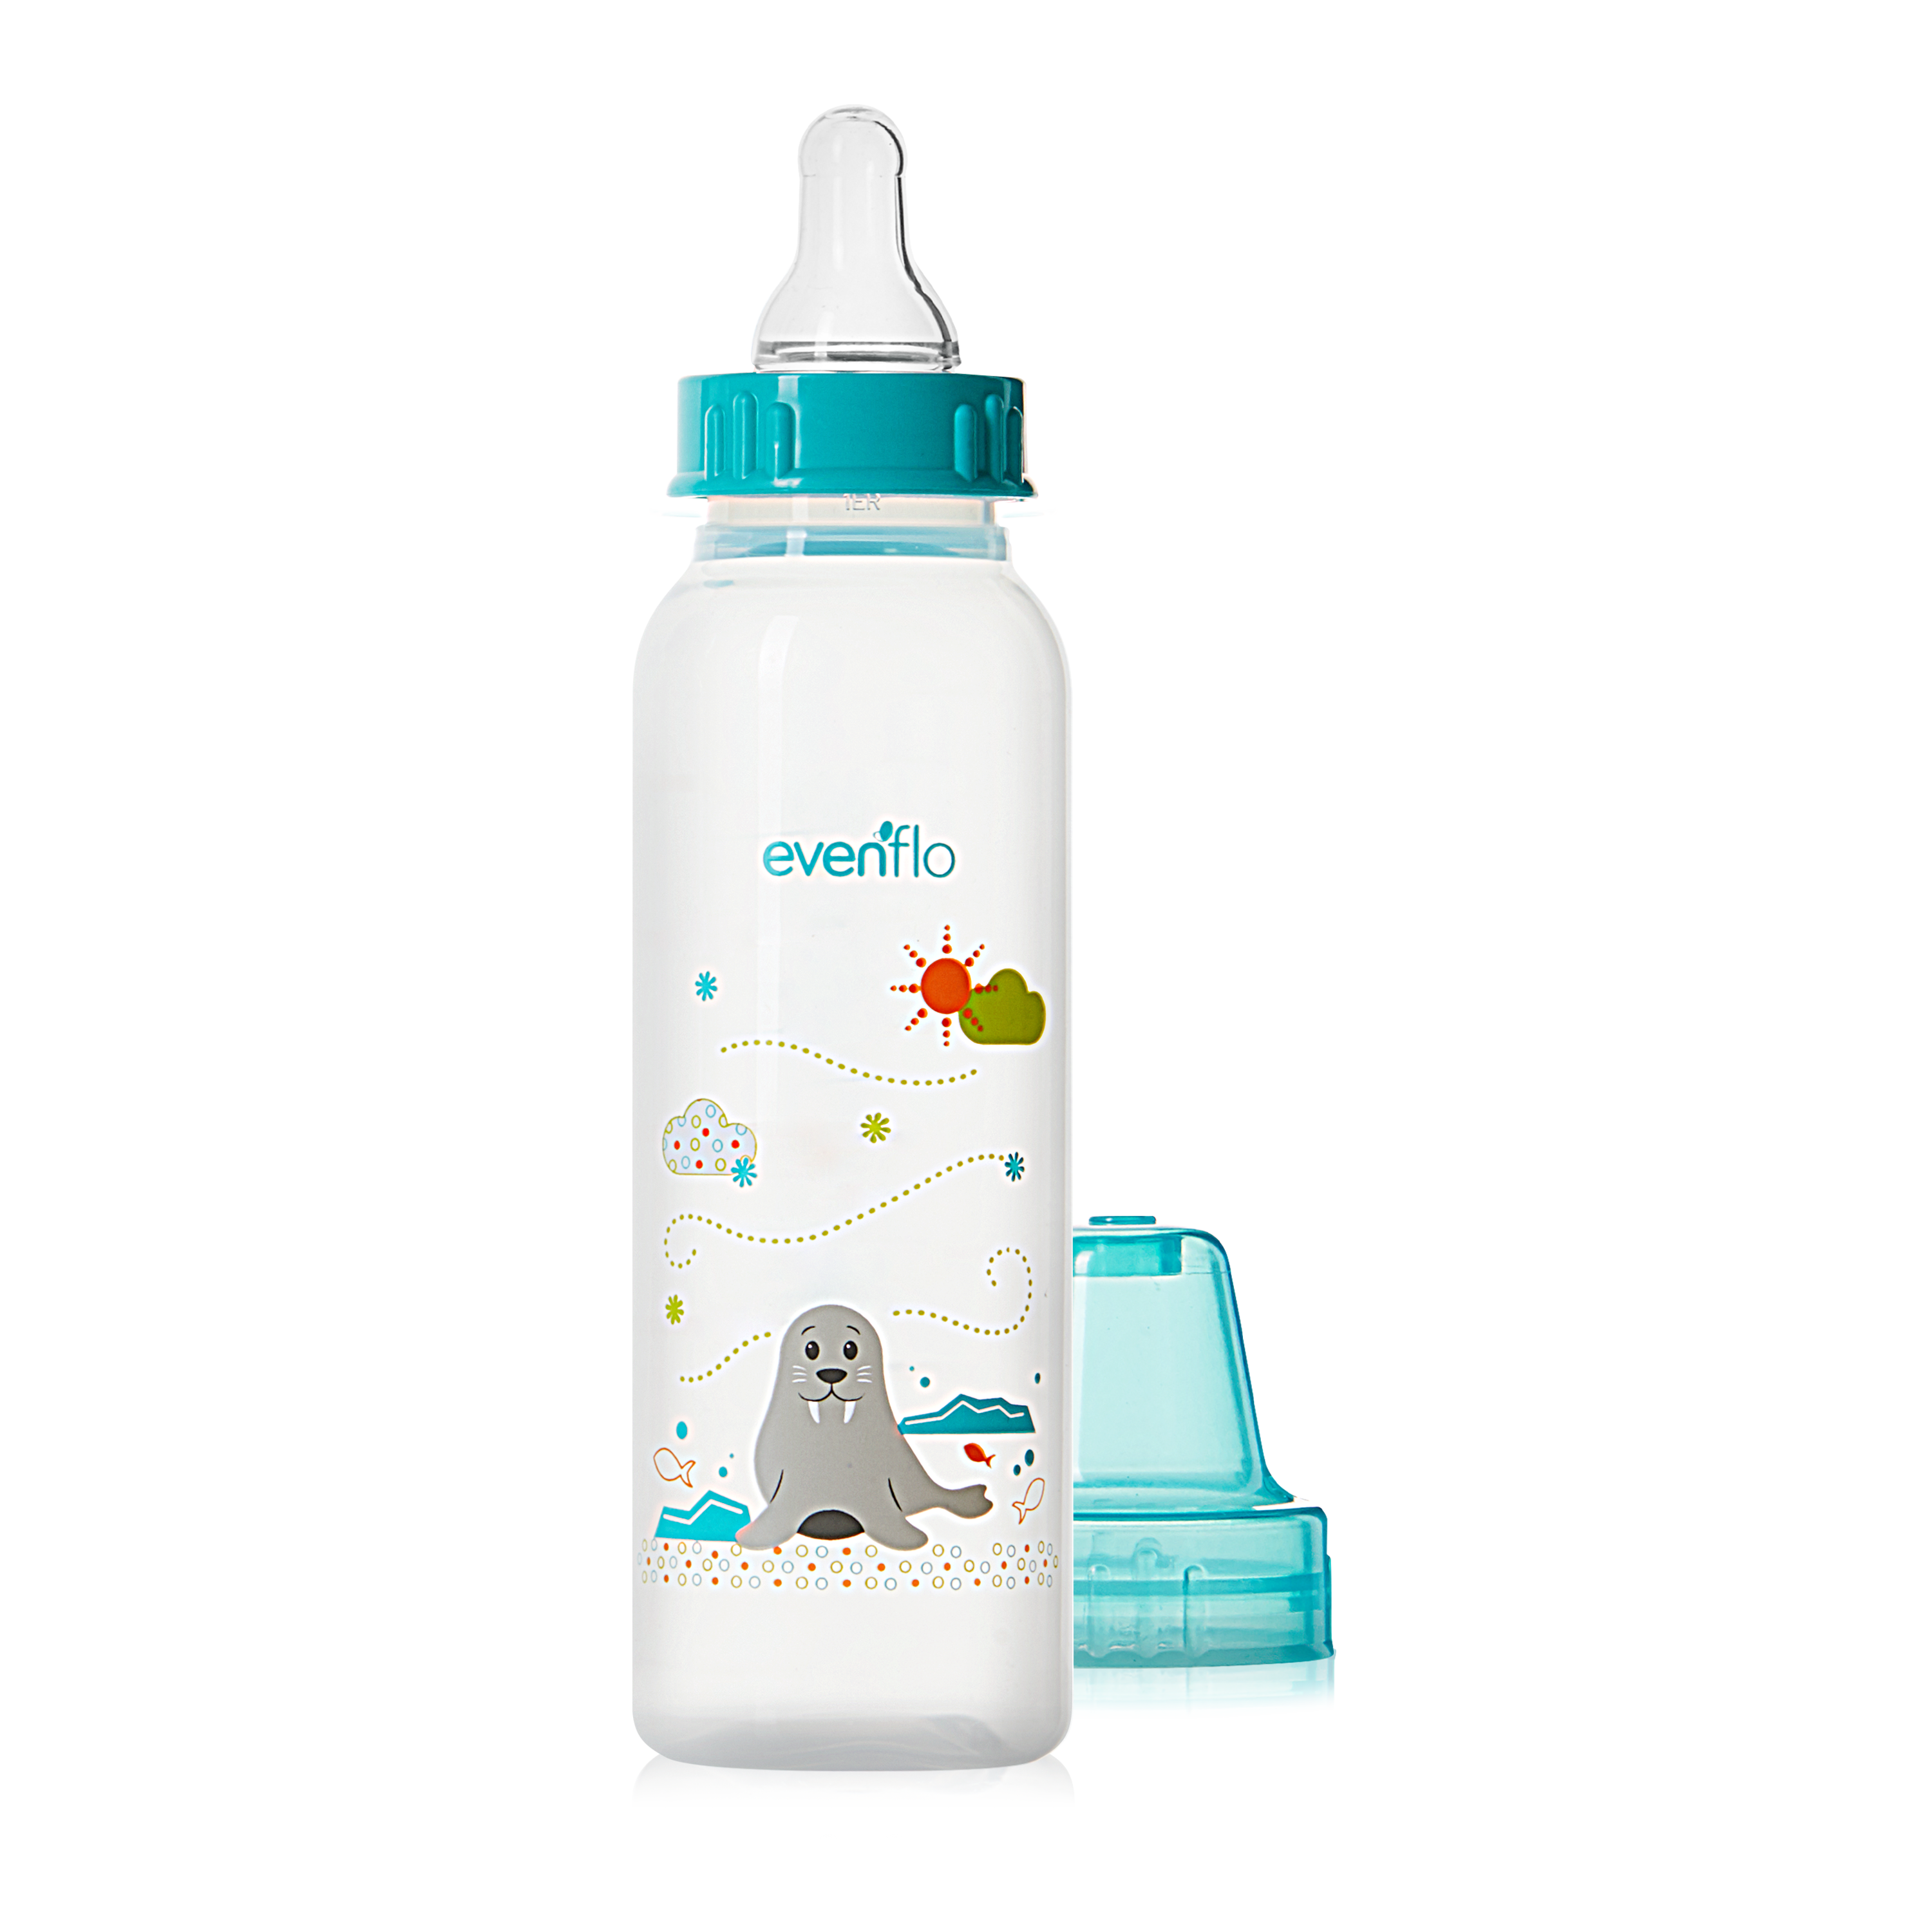 Evenflo Feeding Classic Prints Polypropylene Baby Bottle for Infant and Newborn, 8 oz (12 Pack) - image 4 of 5